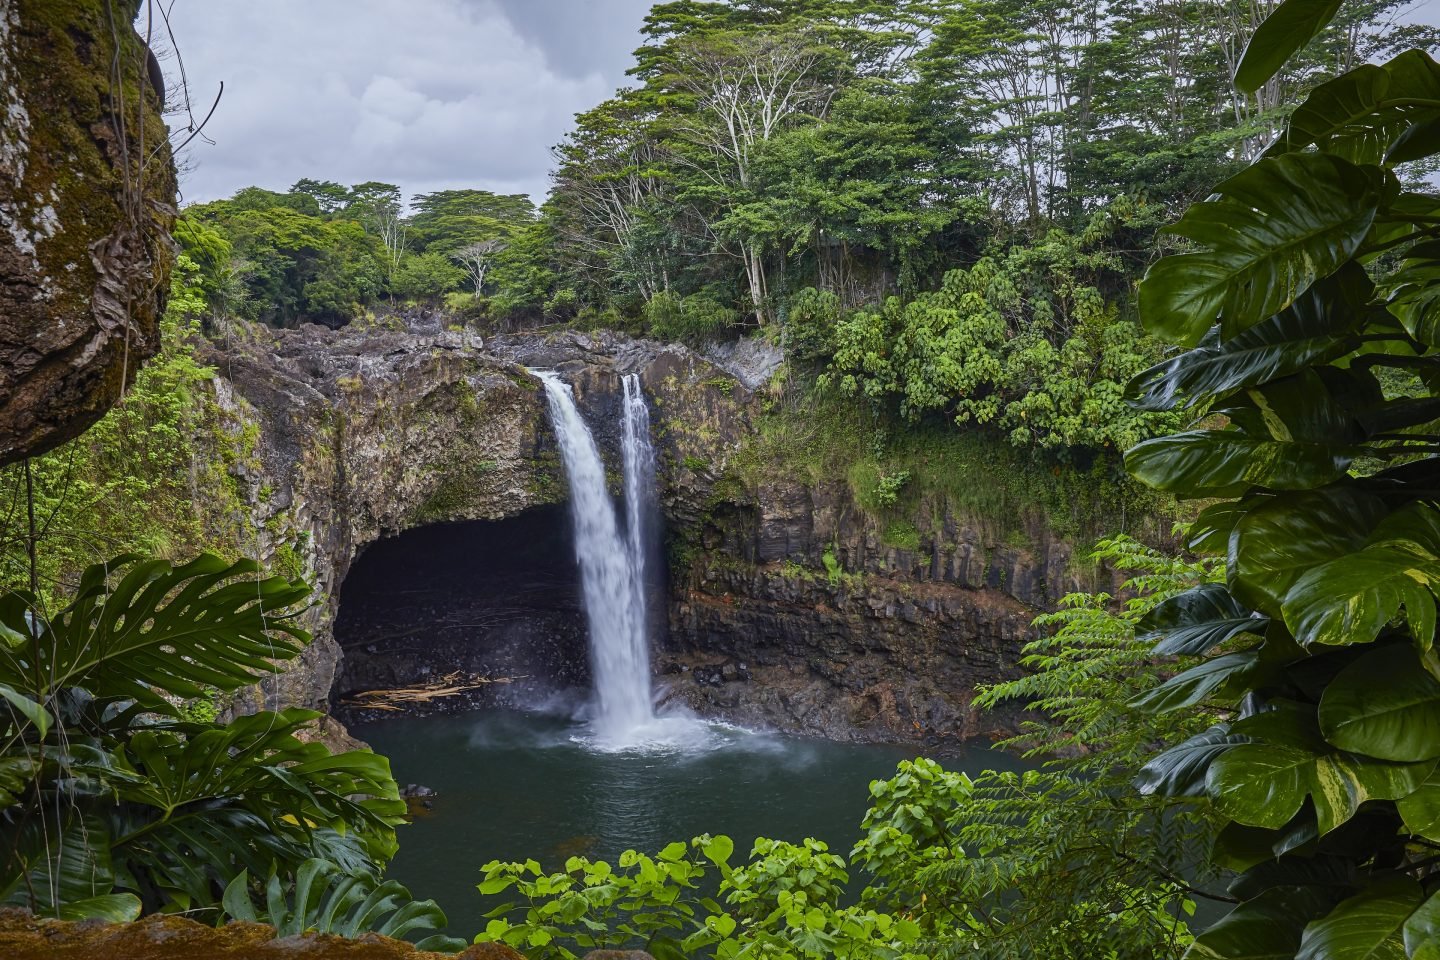 best hawaiian island to visit ranked